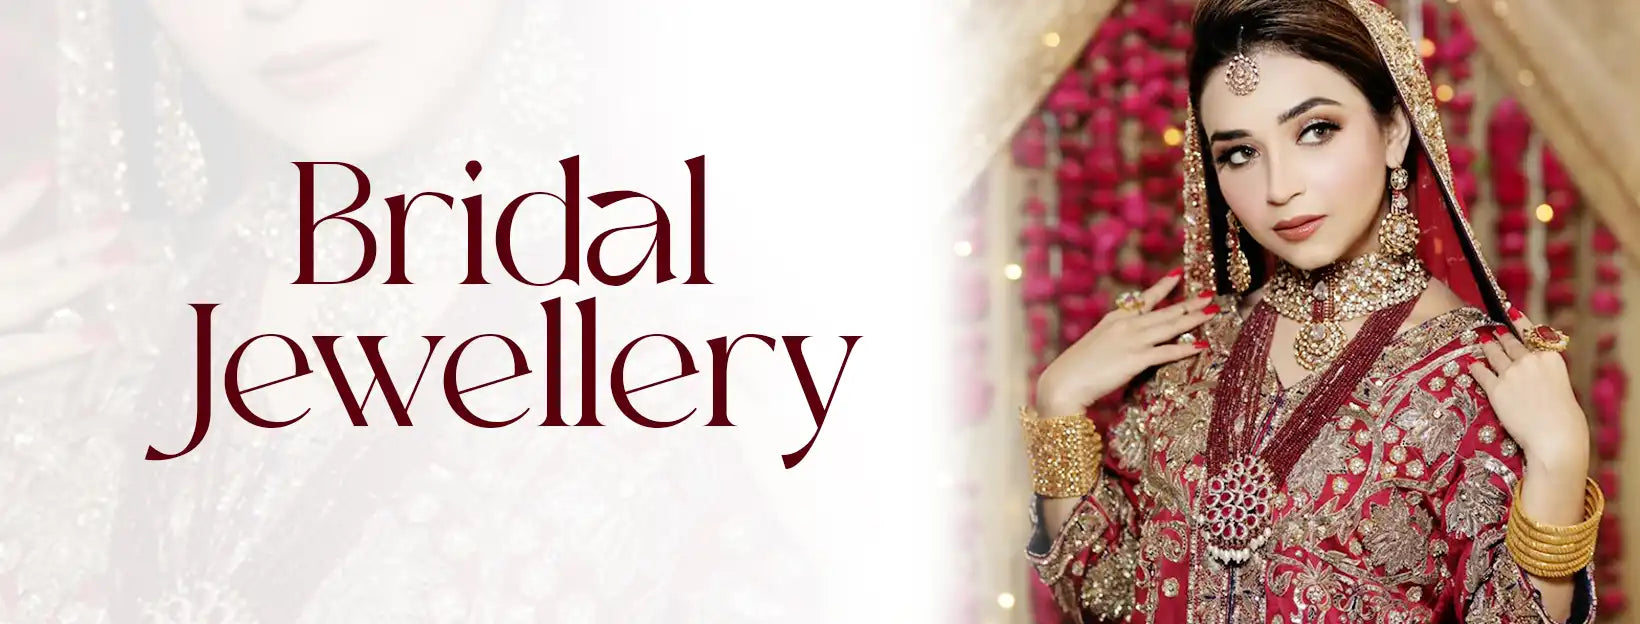 kundan bridal jewellery in pakistan designed by noors jewellery collection